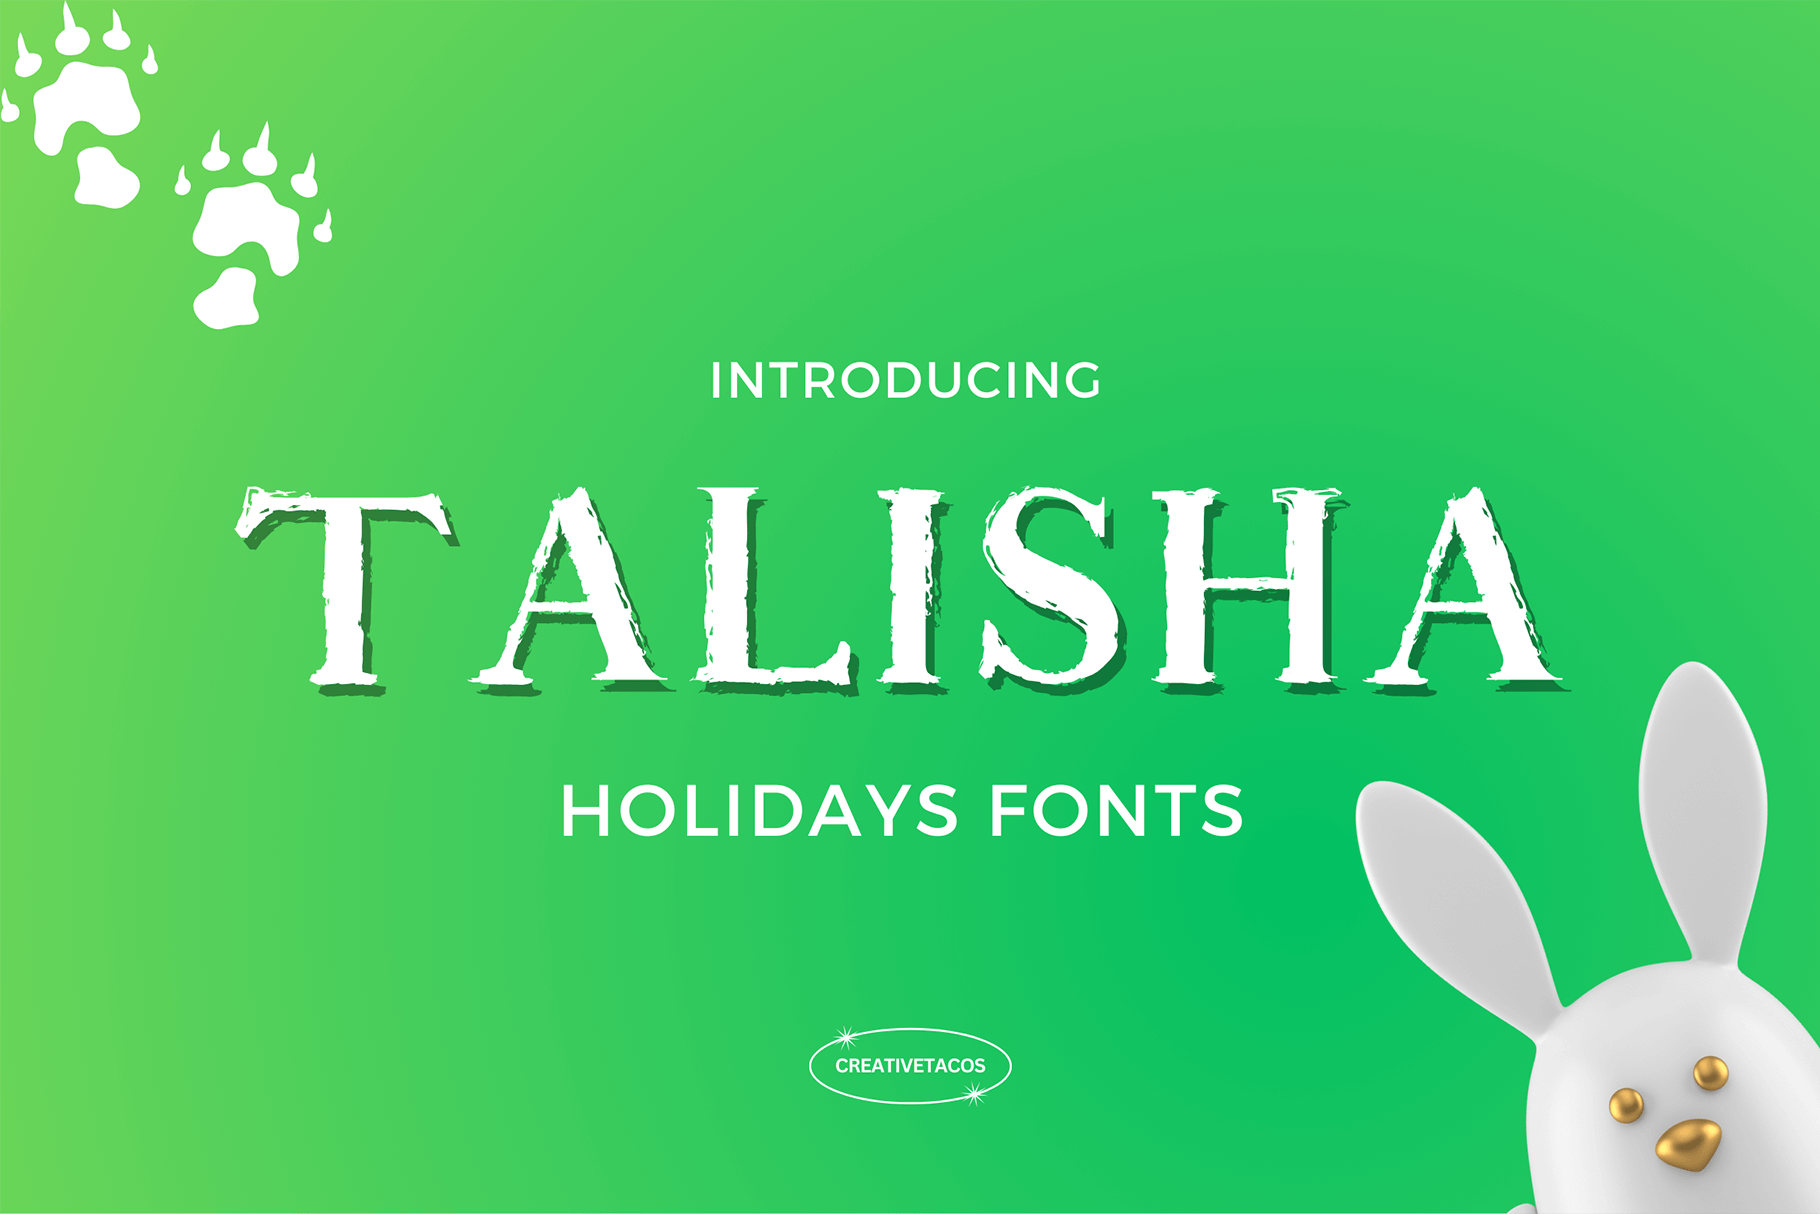 Talisha Holiday Font